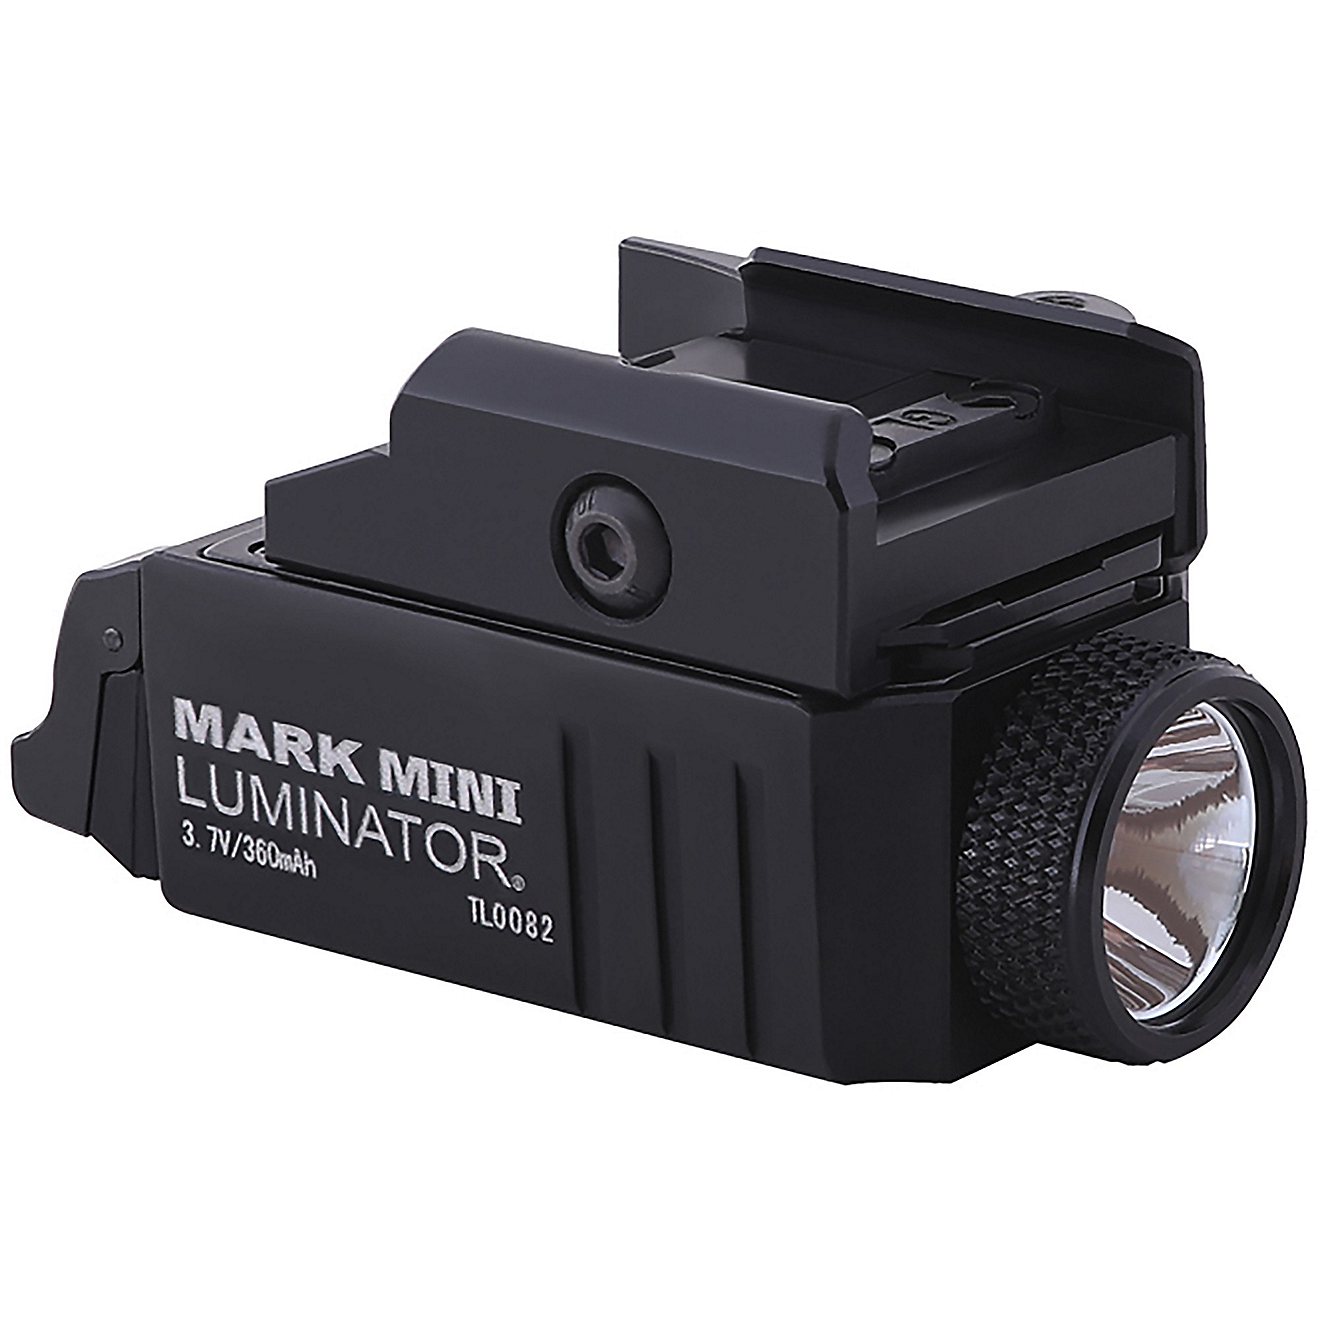 Powertac Mark Mini Luminator 550 Lumen Compact Pistol Light                                                                      - view number 3